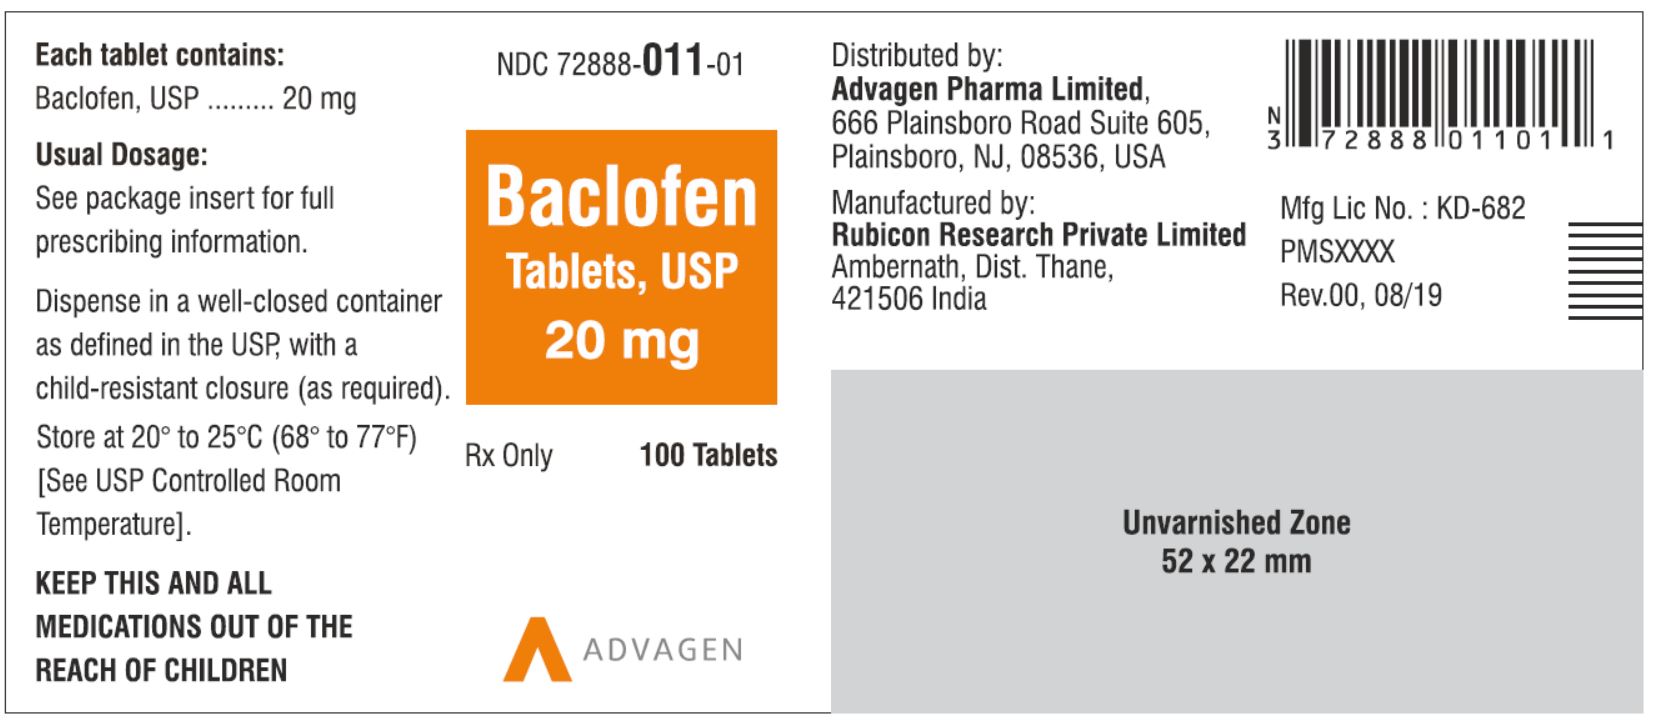 NDC: <a href=/NDC/72888-011-01>72888-011-01</a> - Baclofen Tablets, USP 20 mg - 100 Tablets